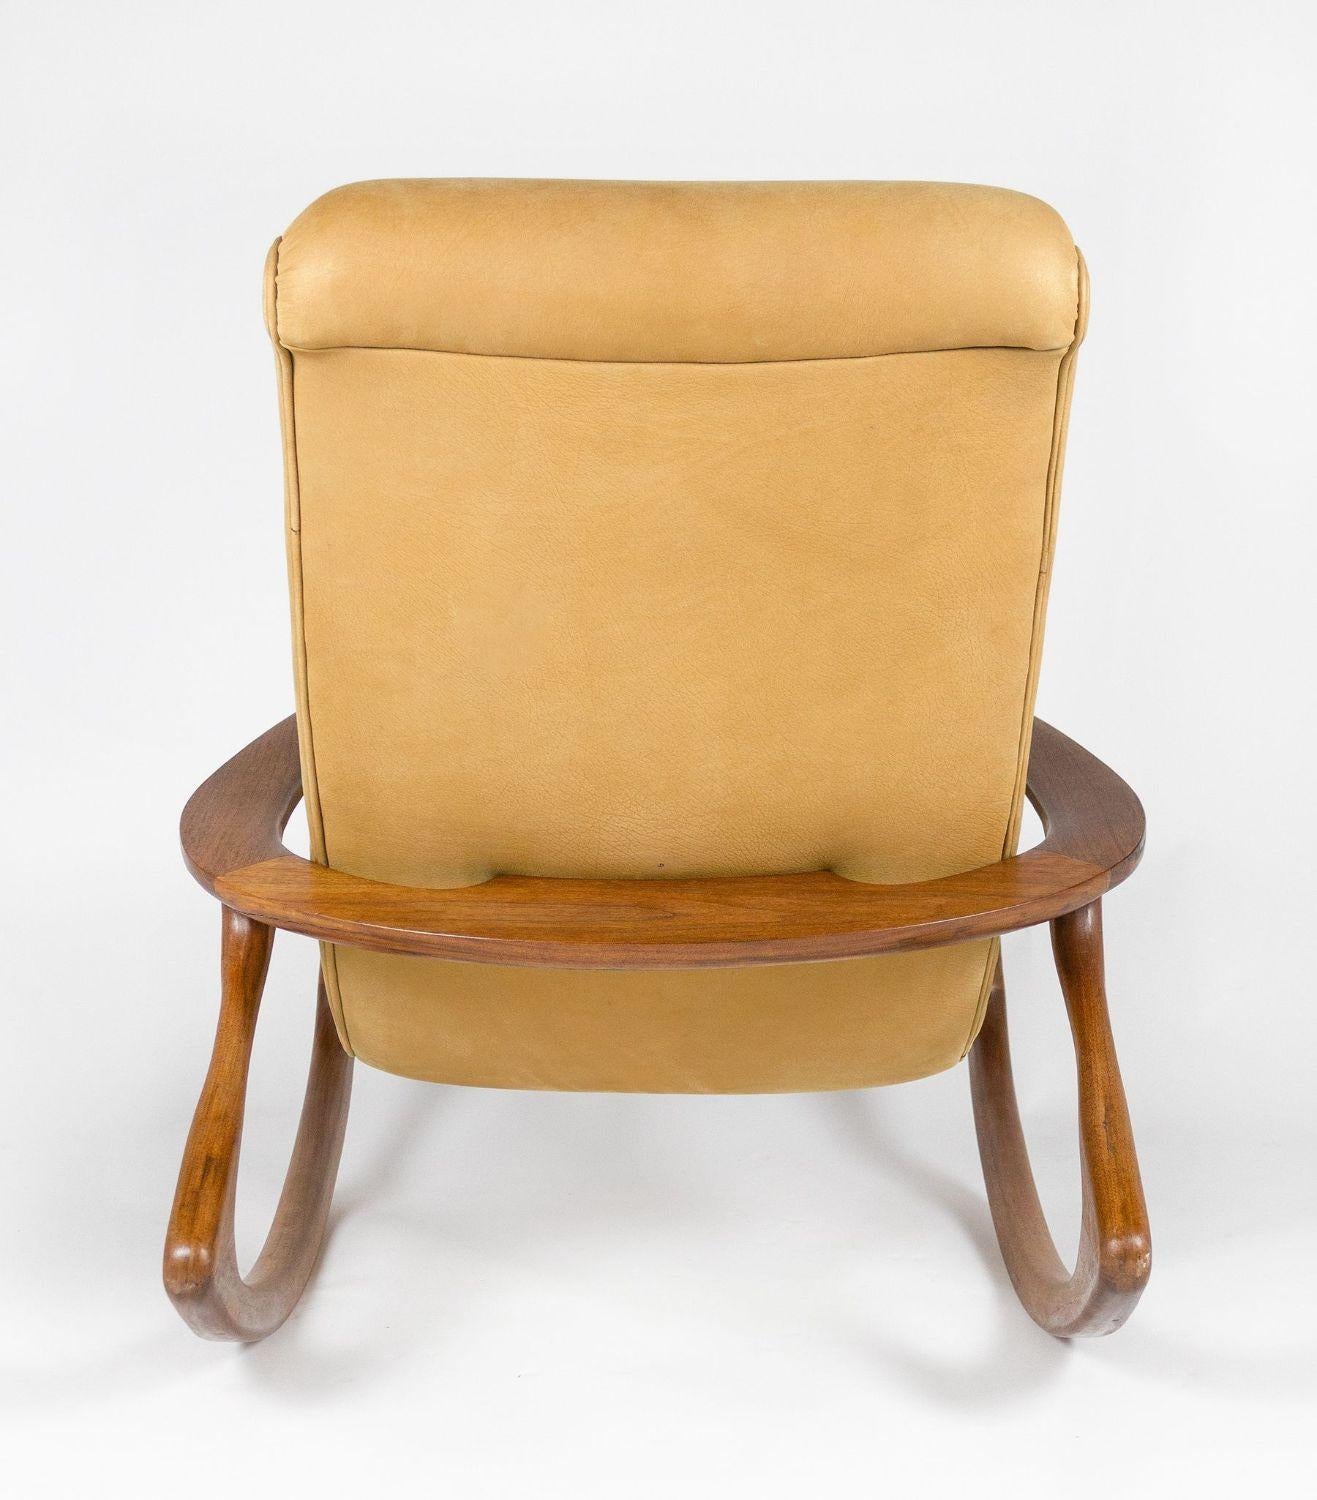 20th Century Vladimir Kagan Rocking Chair in Walnut and Leather Kagan-Dreyfuss 1953